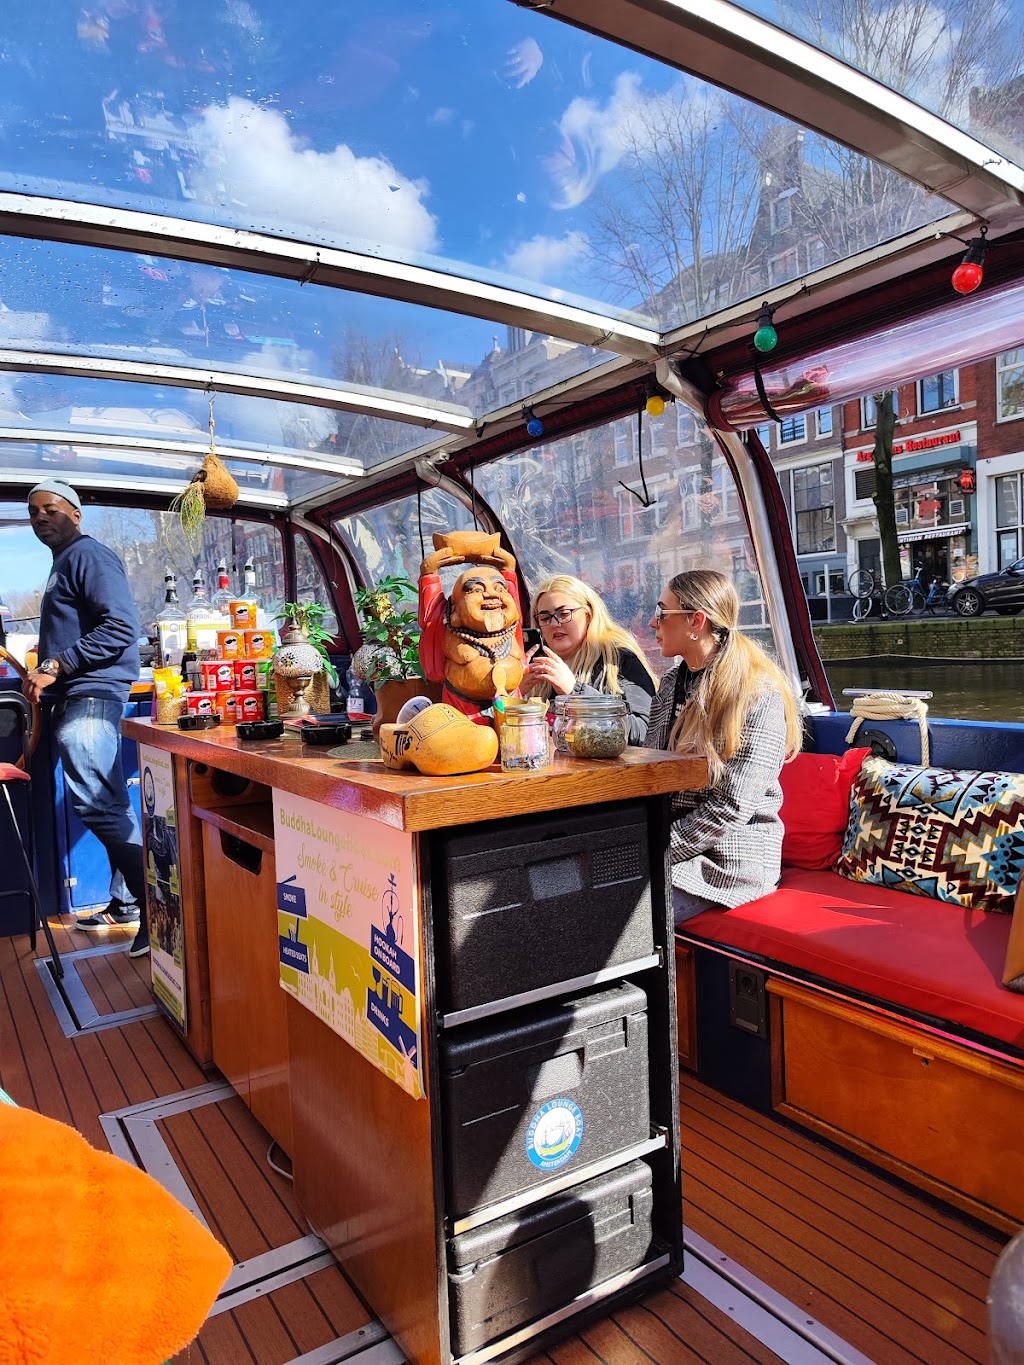 Buddha Lounge Boat Amsterdam | Oudezijds Voorburgwal 228a, 1012 DV Amsterdam, Netherlands | Phone: 06 39207436